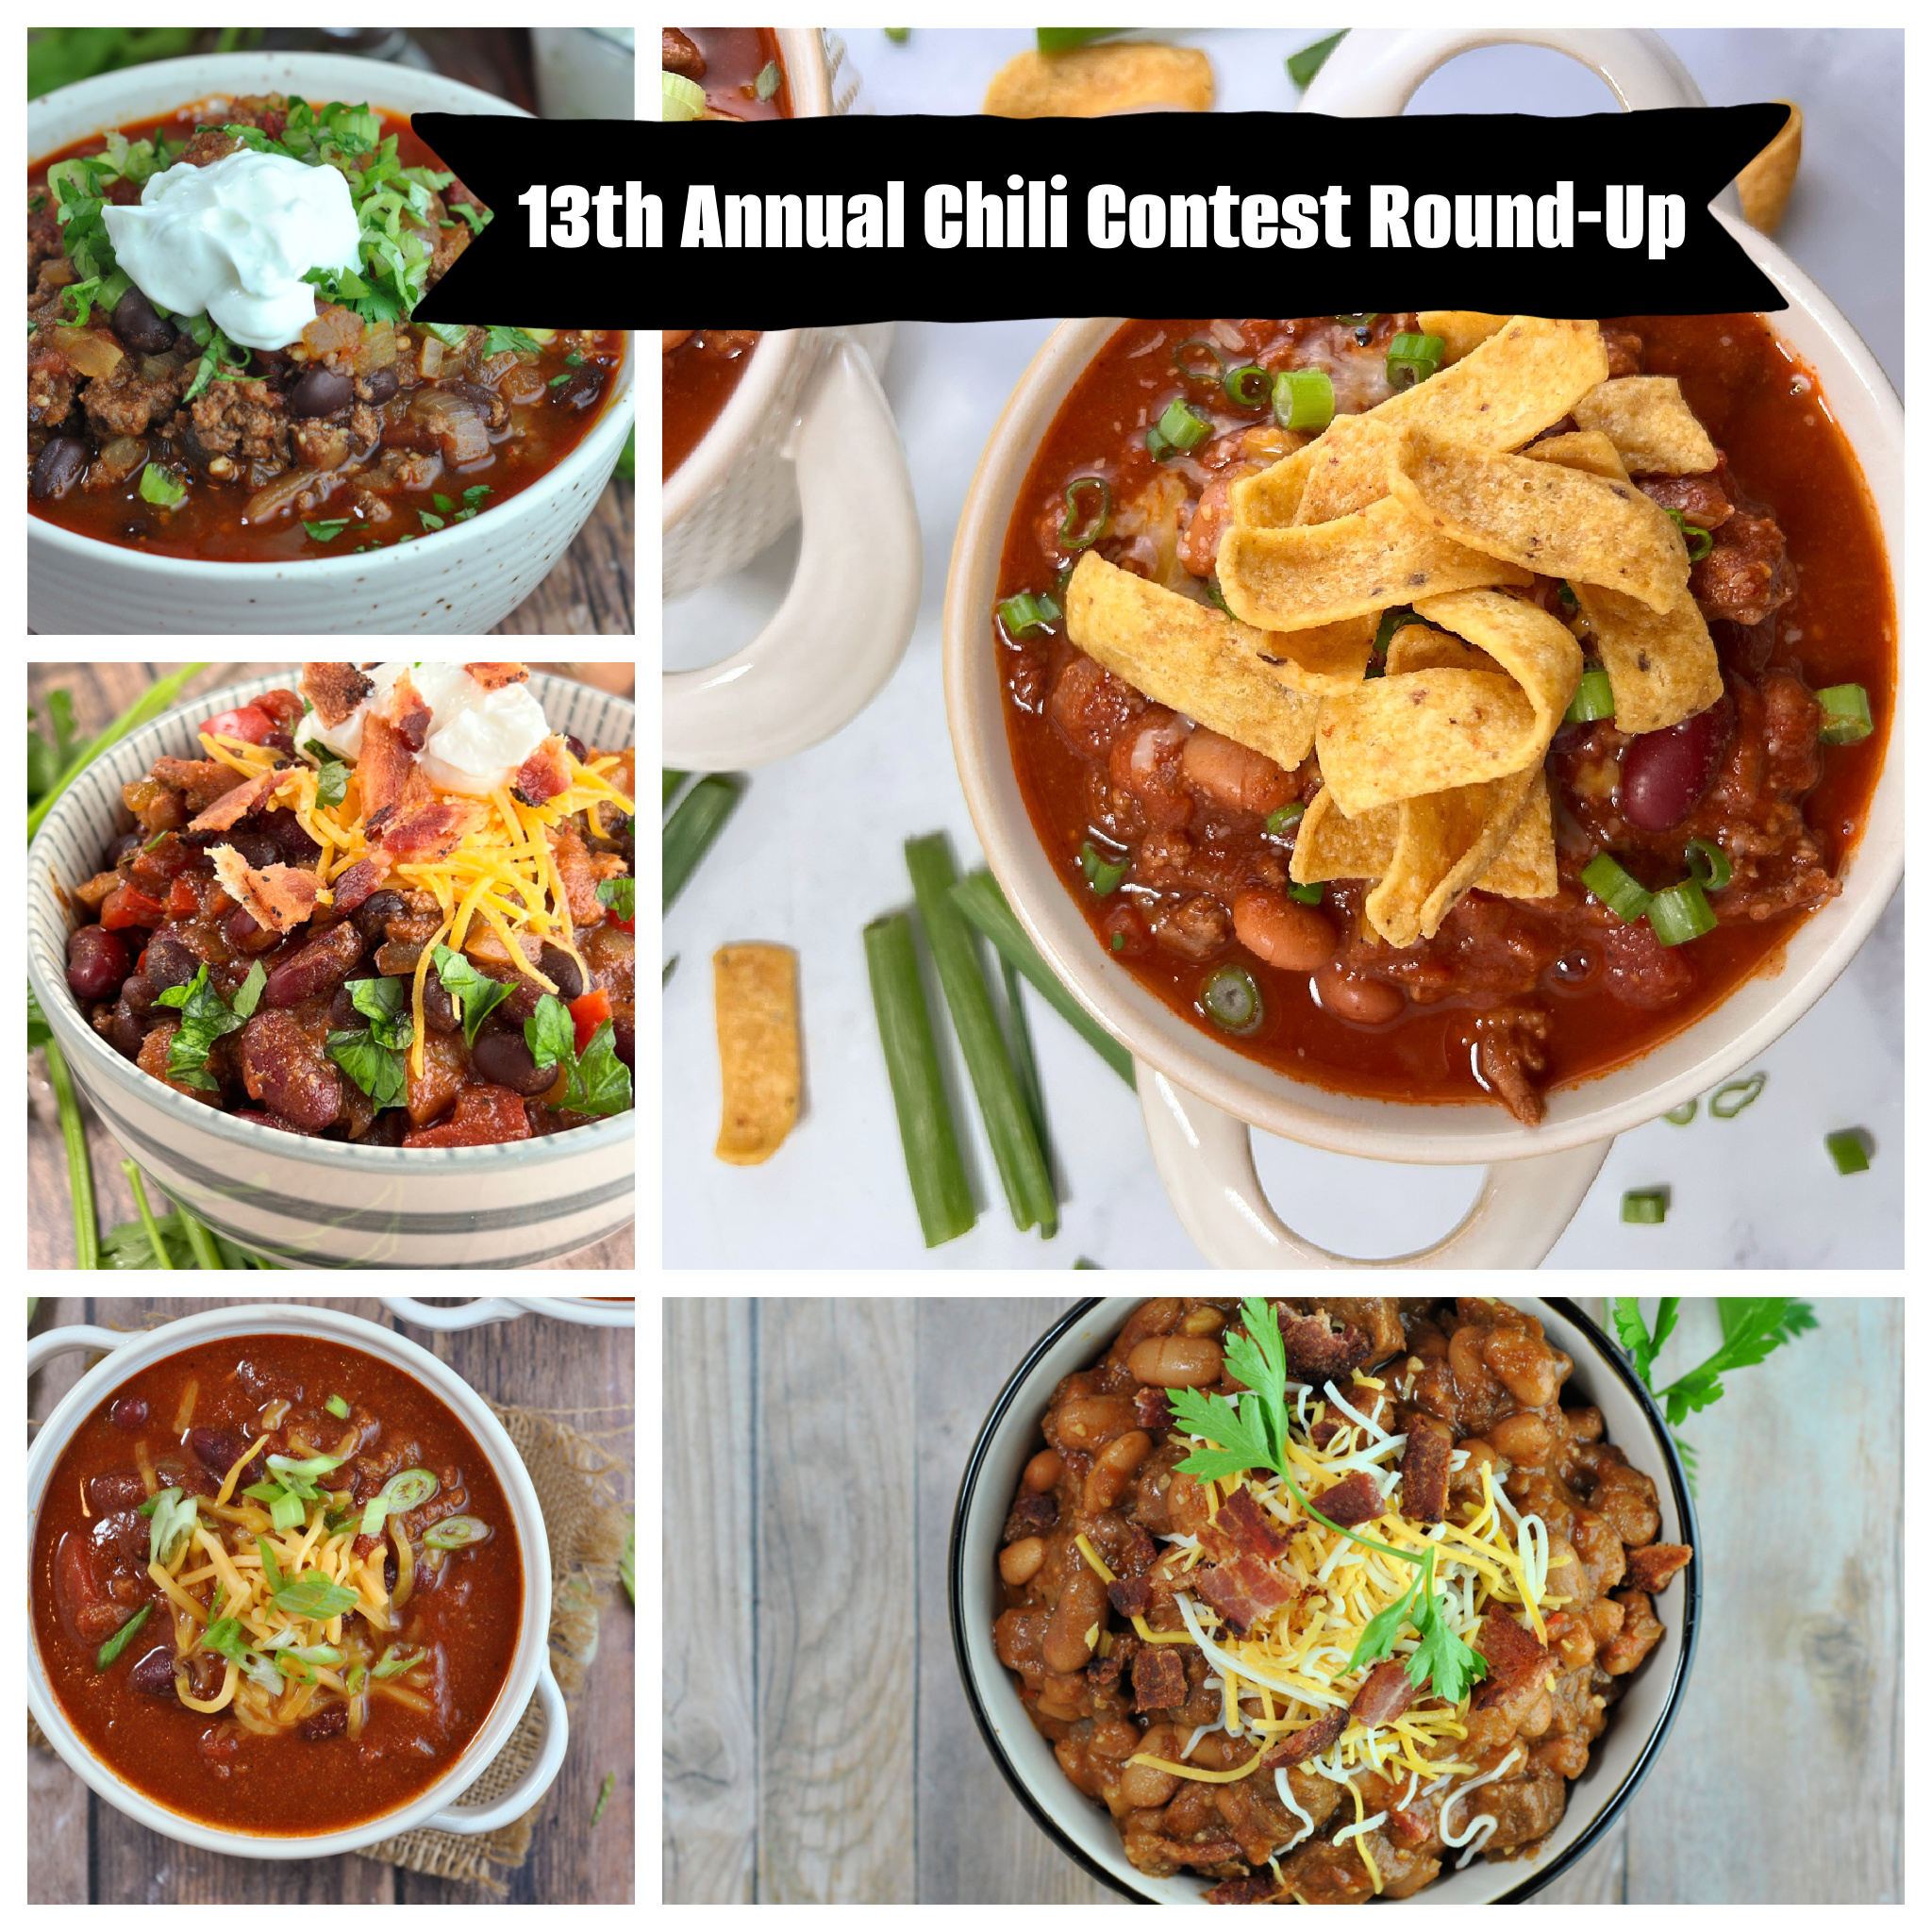 13th Annual Chili Contest: Round-Up and Winner Announced! via @preventionrd